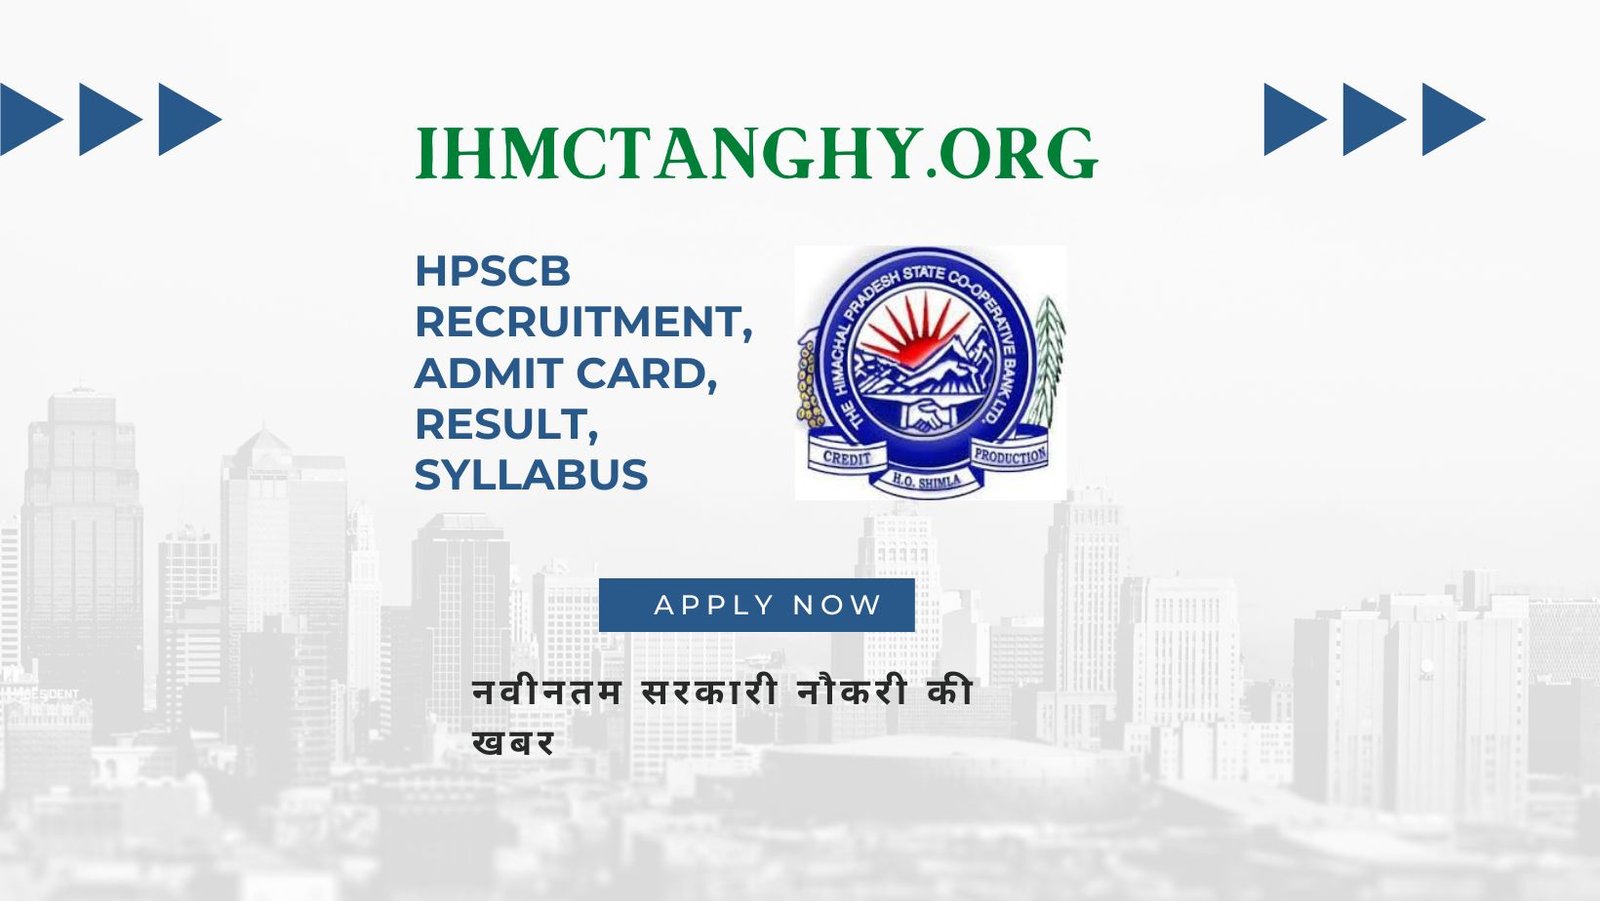 HPSCB Recruitment